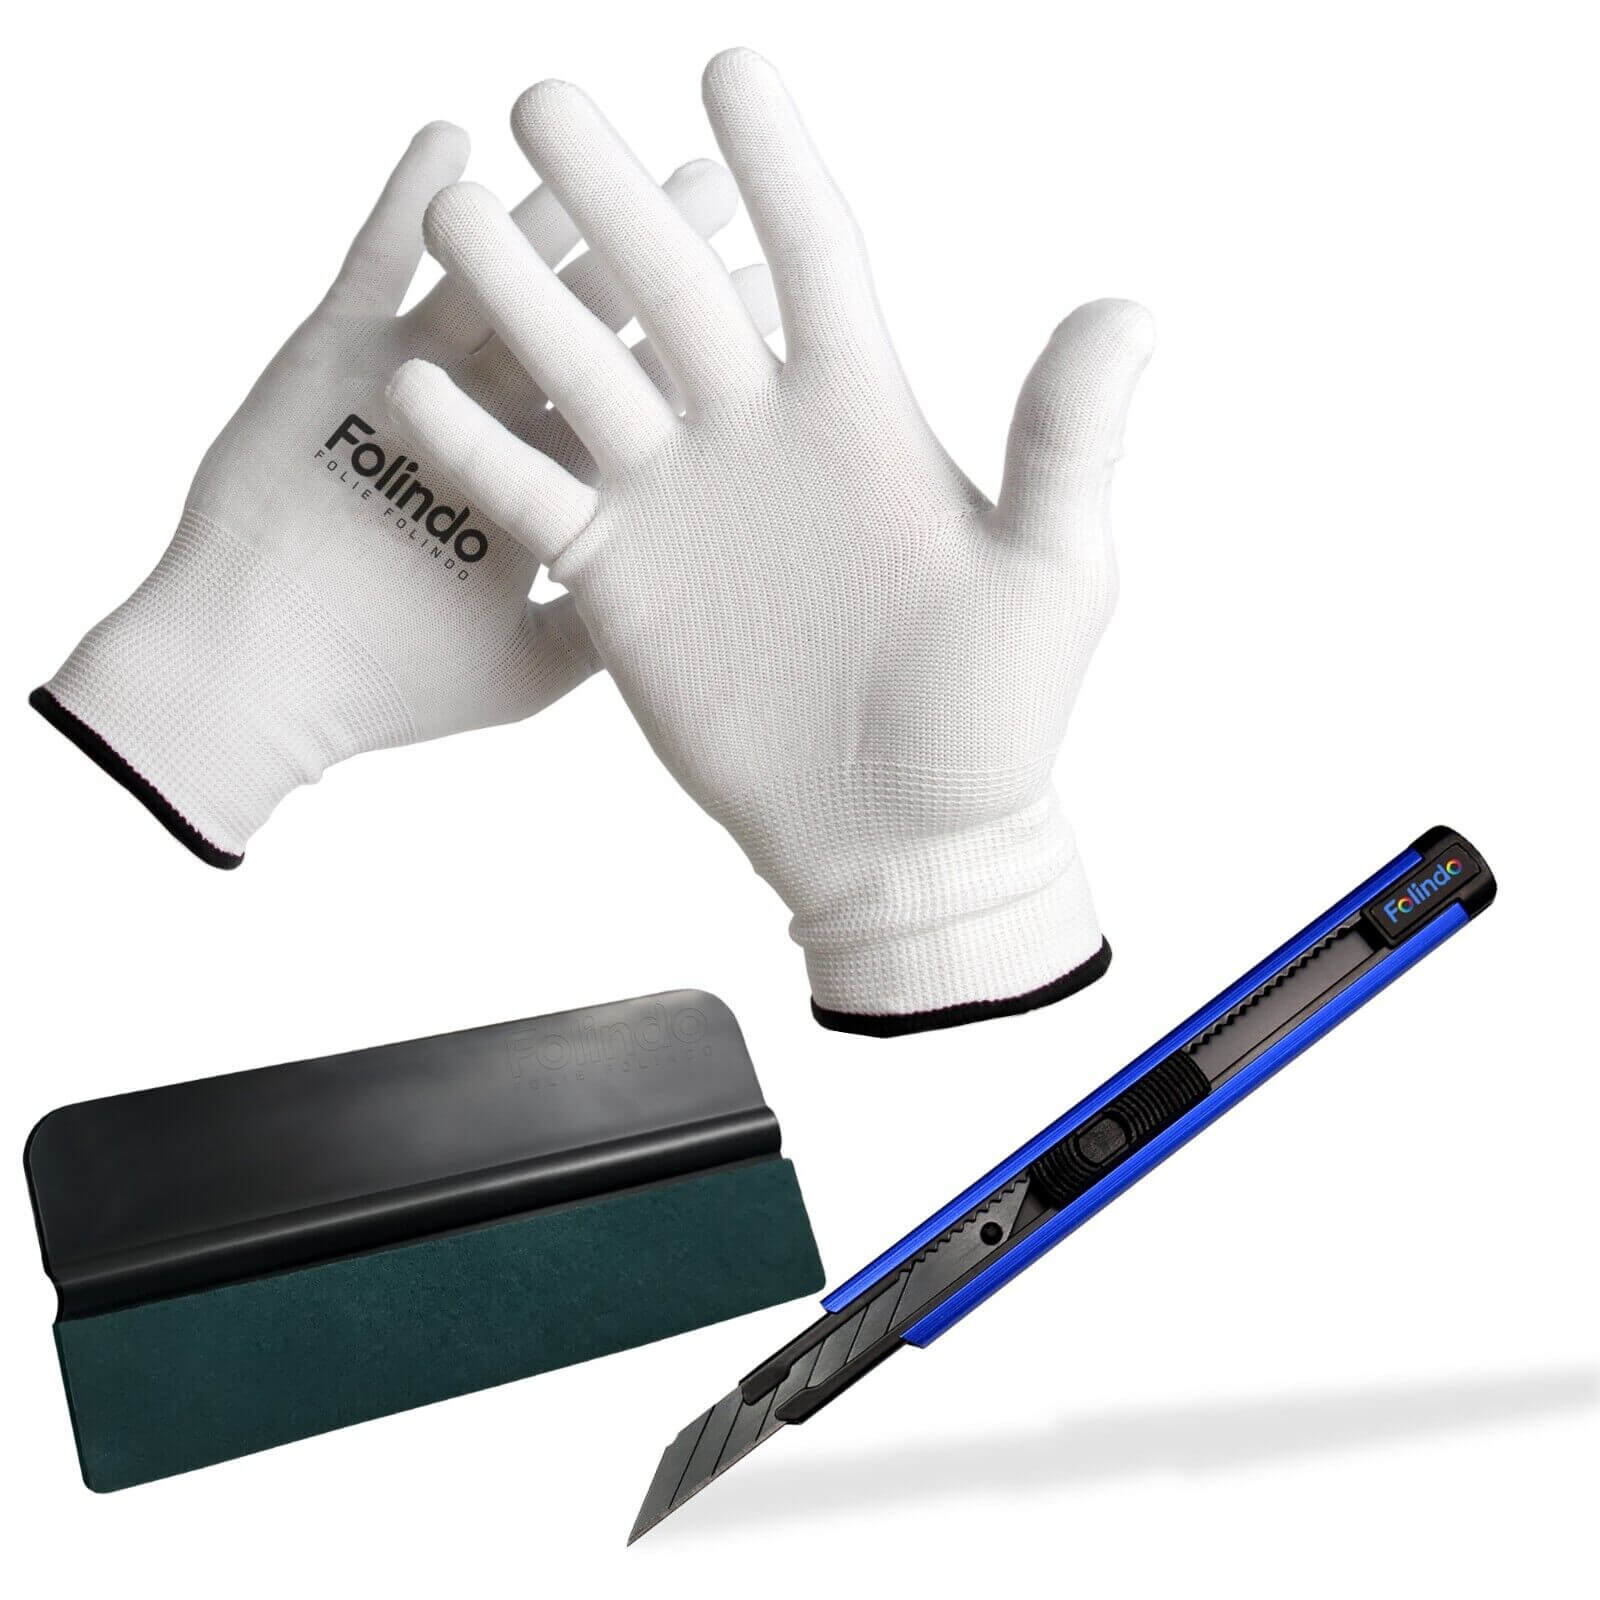 https://tiptopcarbon.de/media/image/e6/4b/ca/Folindo-Profi-Folier-Set-Rakel-30-Cutter-Fusselfreie-Handschuhe-Titelbild.jpg